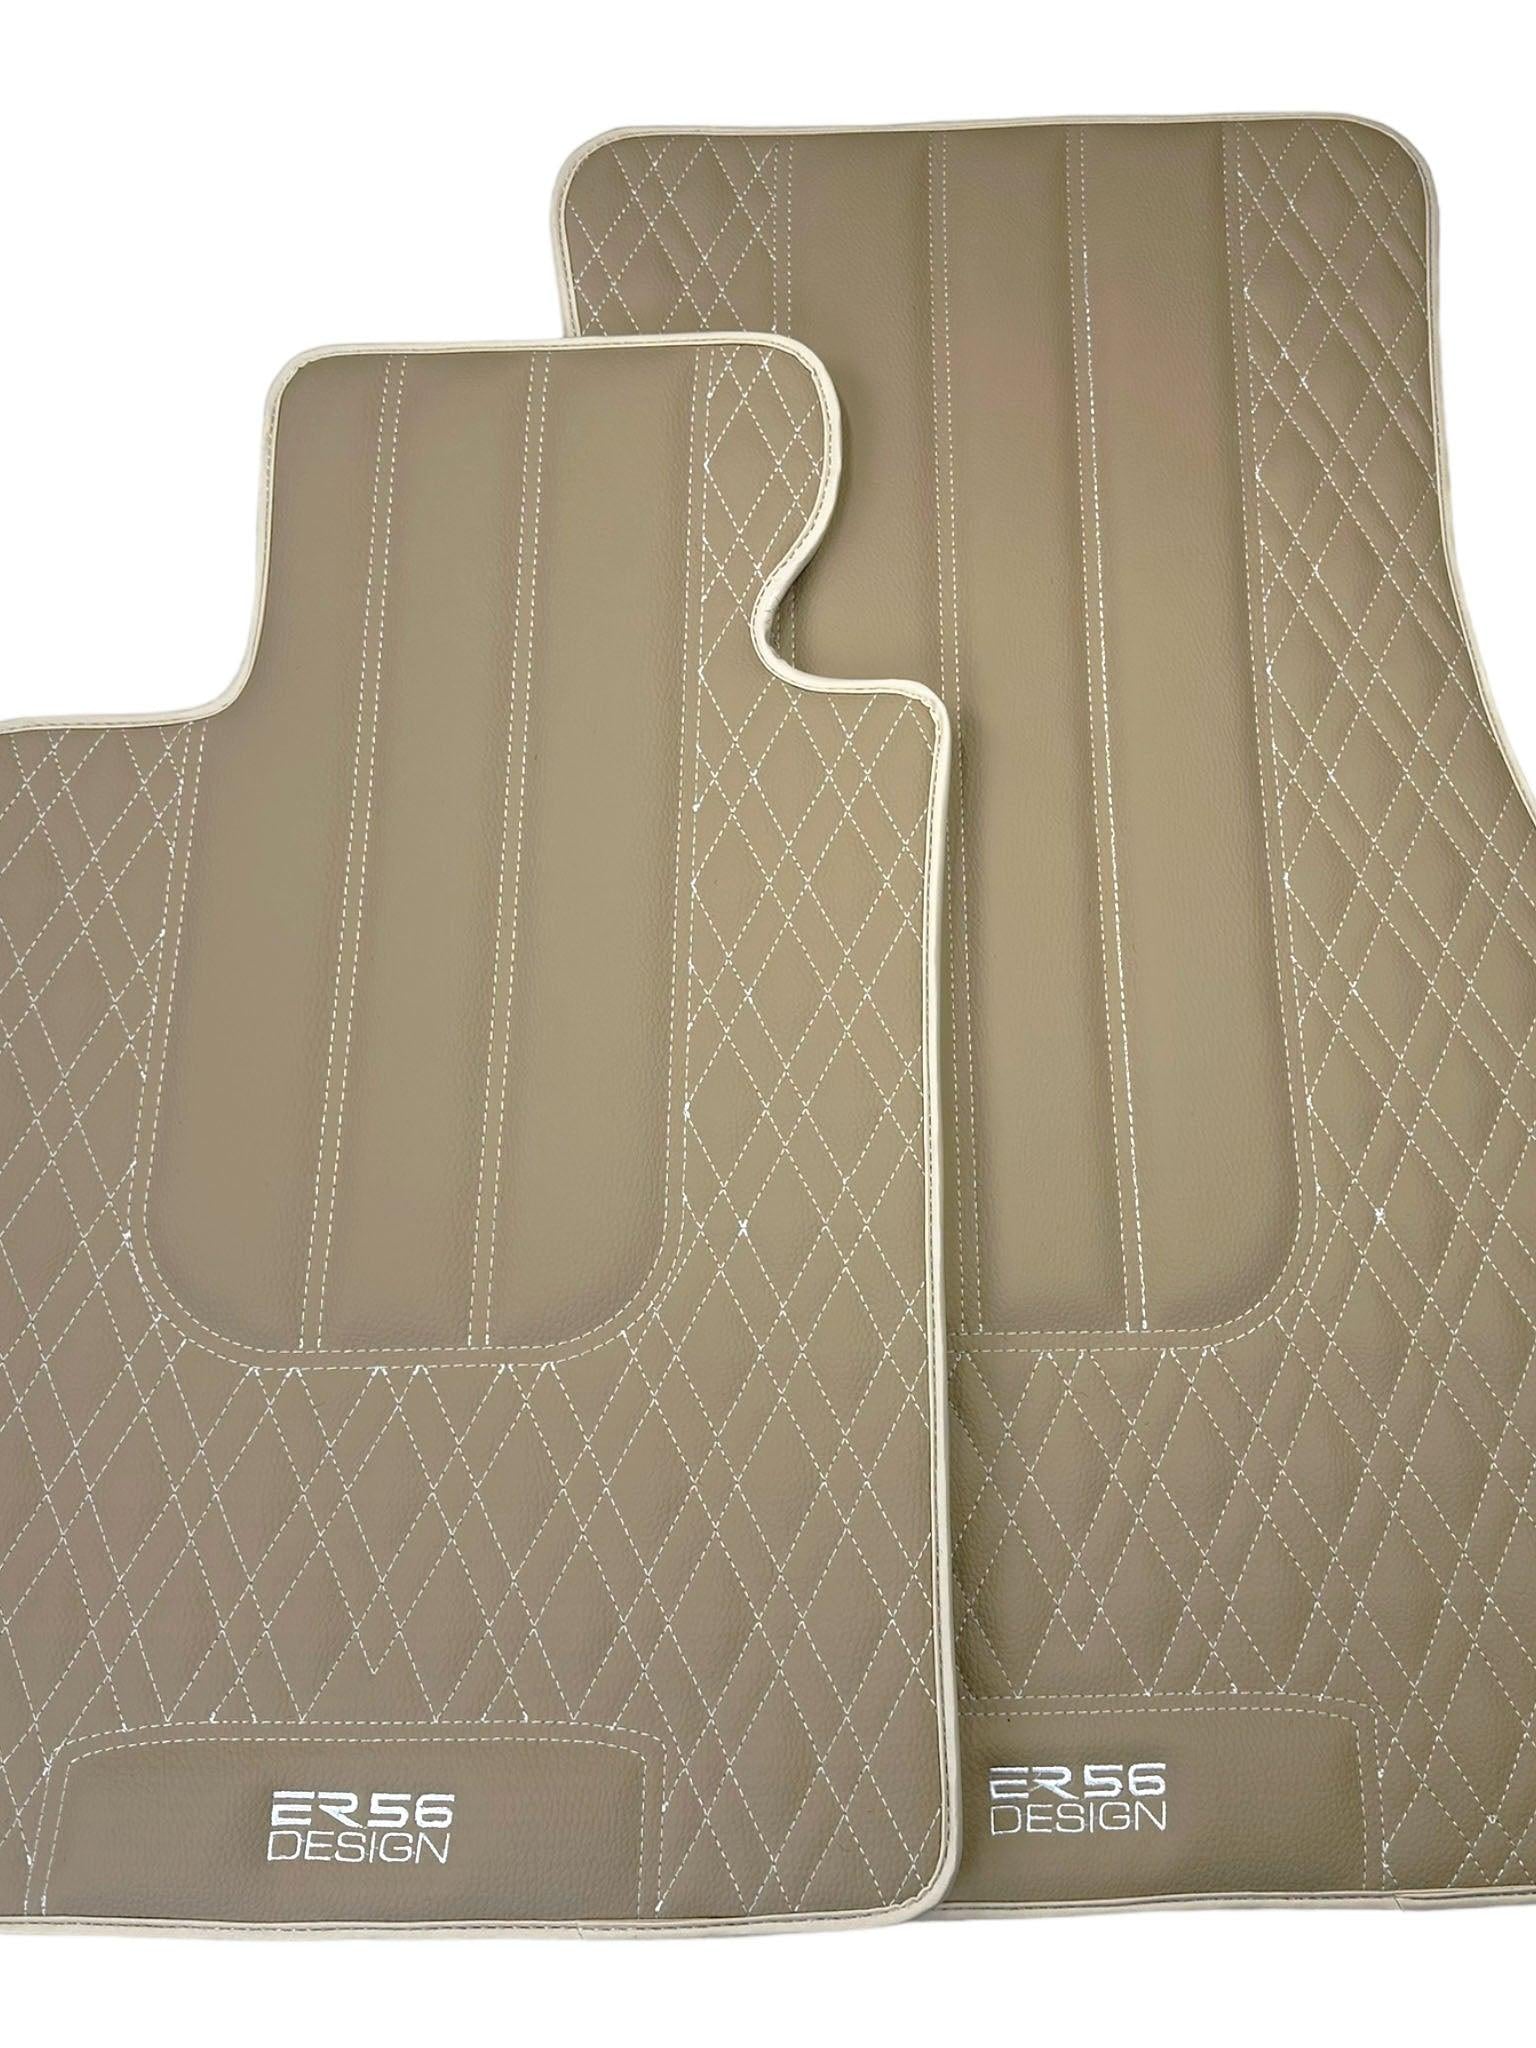 Beige Leather Floor Floor Mats For BMW 7 Series E66 | Fighter Jet Edition AutoWin Brand |Sky Blue Trim